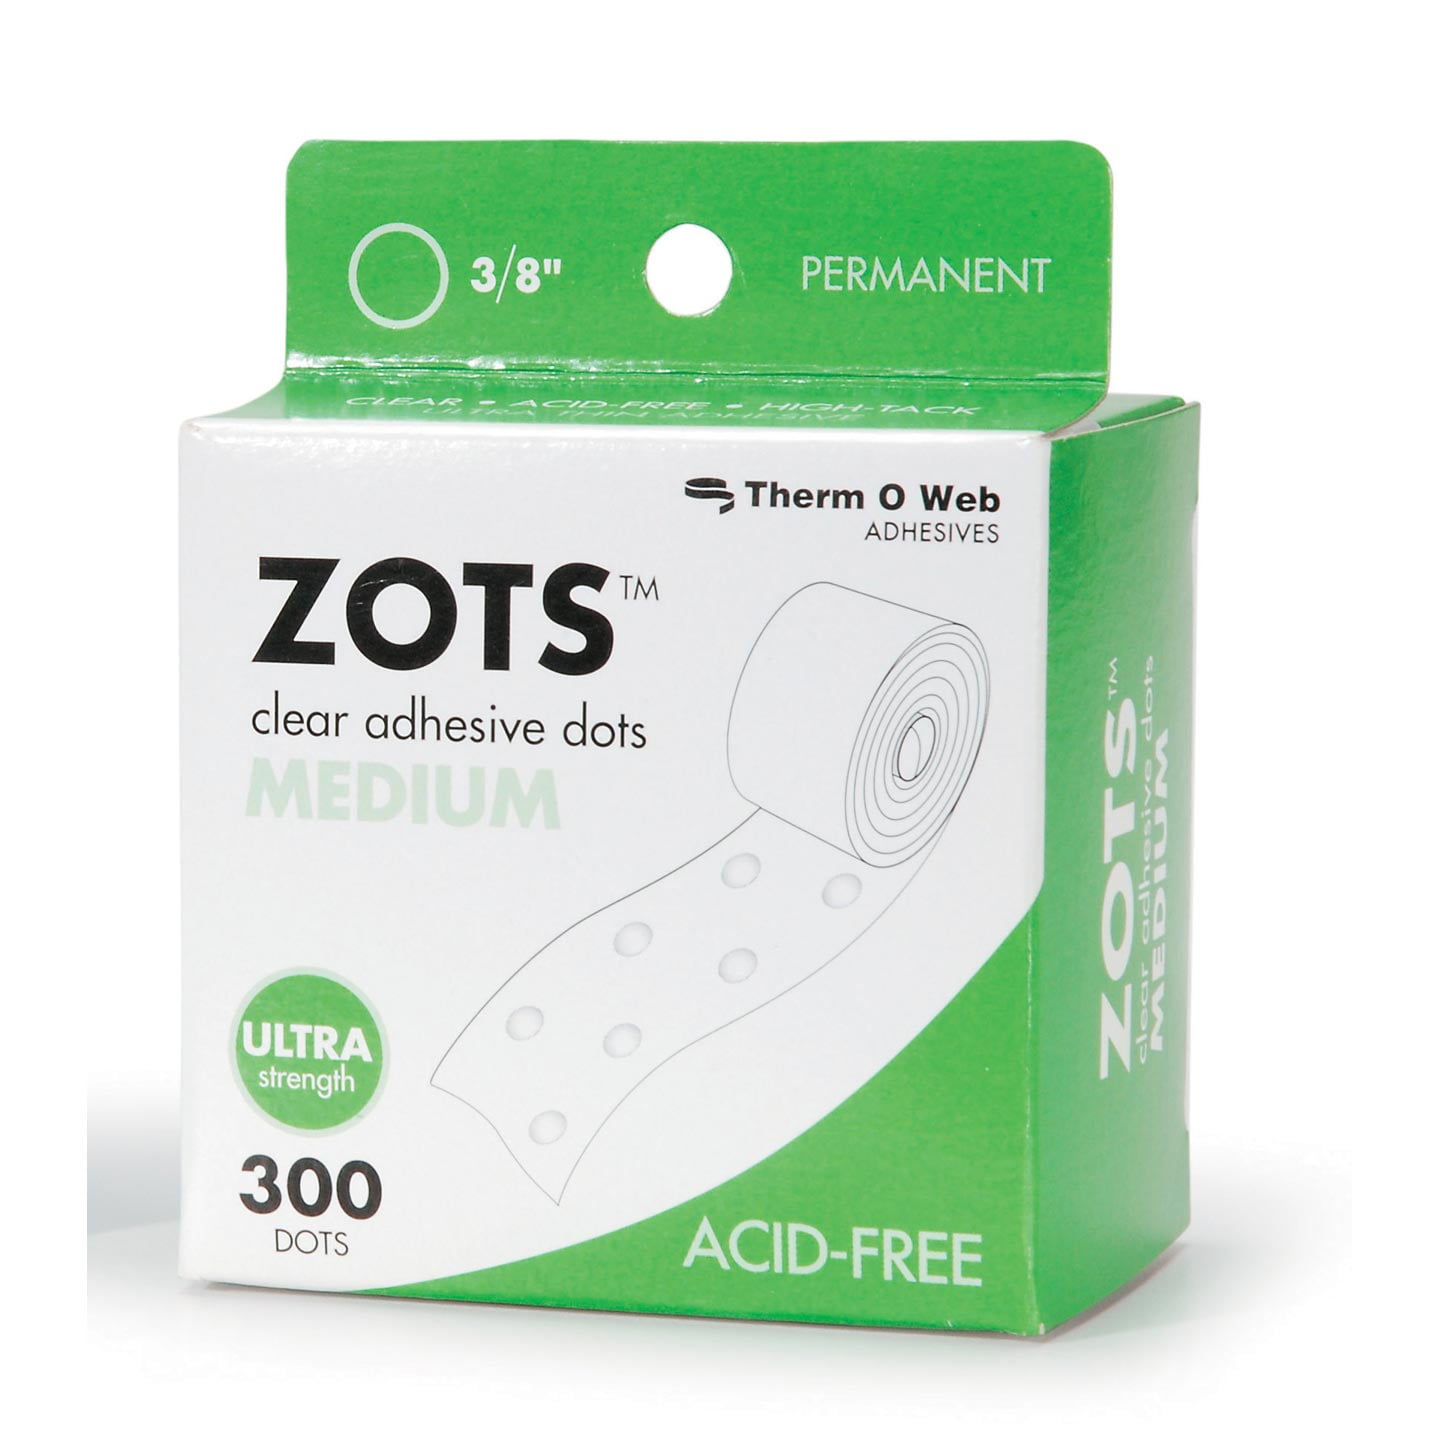 Therm O Web - Zots - Clear Adhesive Dots - Large - 300 Dots